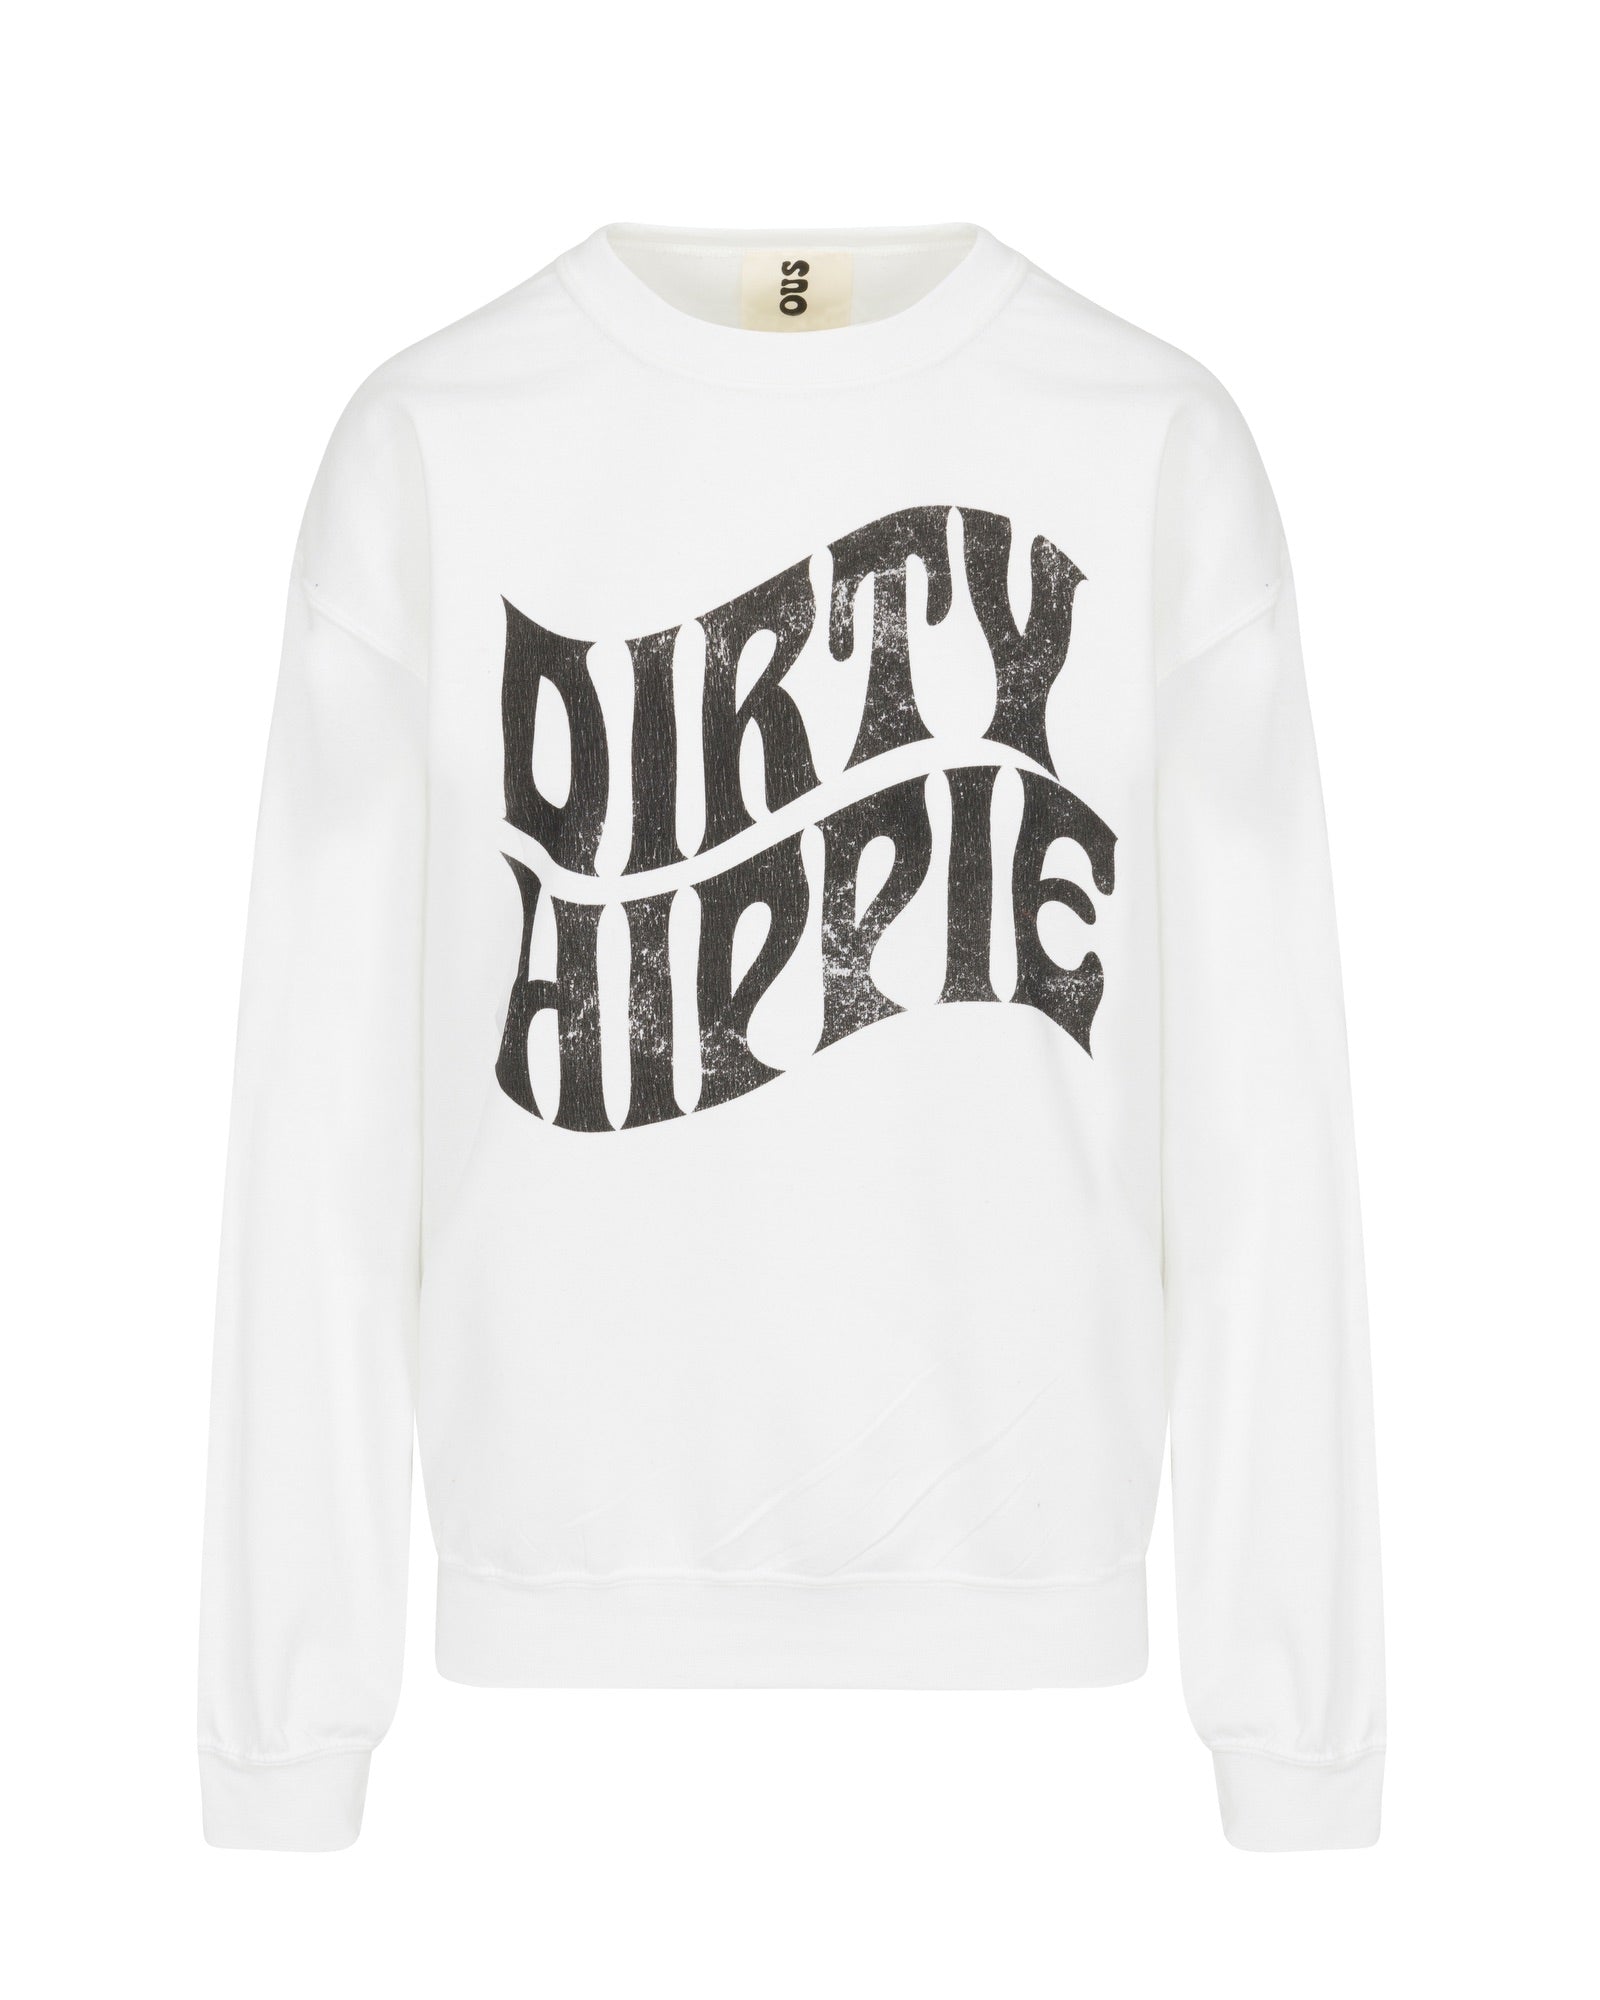 Dirty Hippie Vintage Sweatshirt